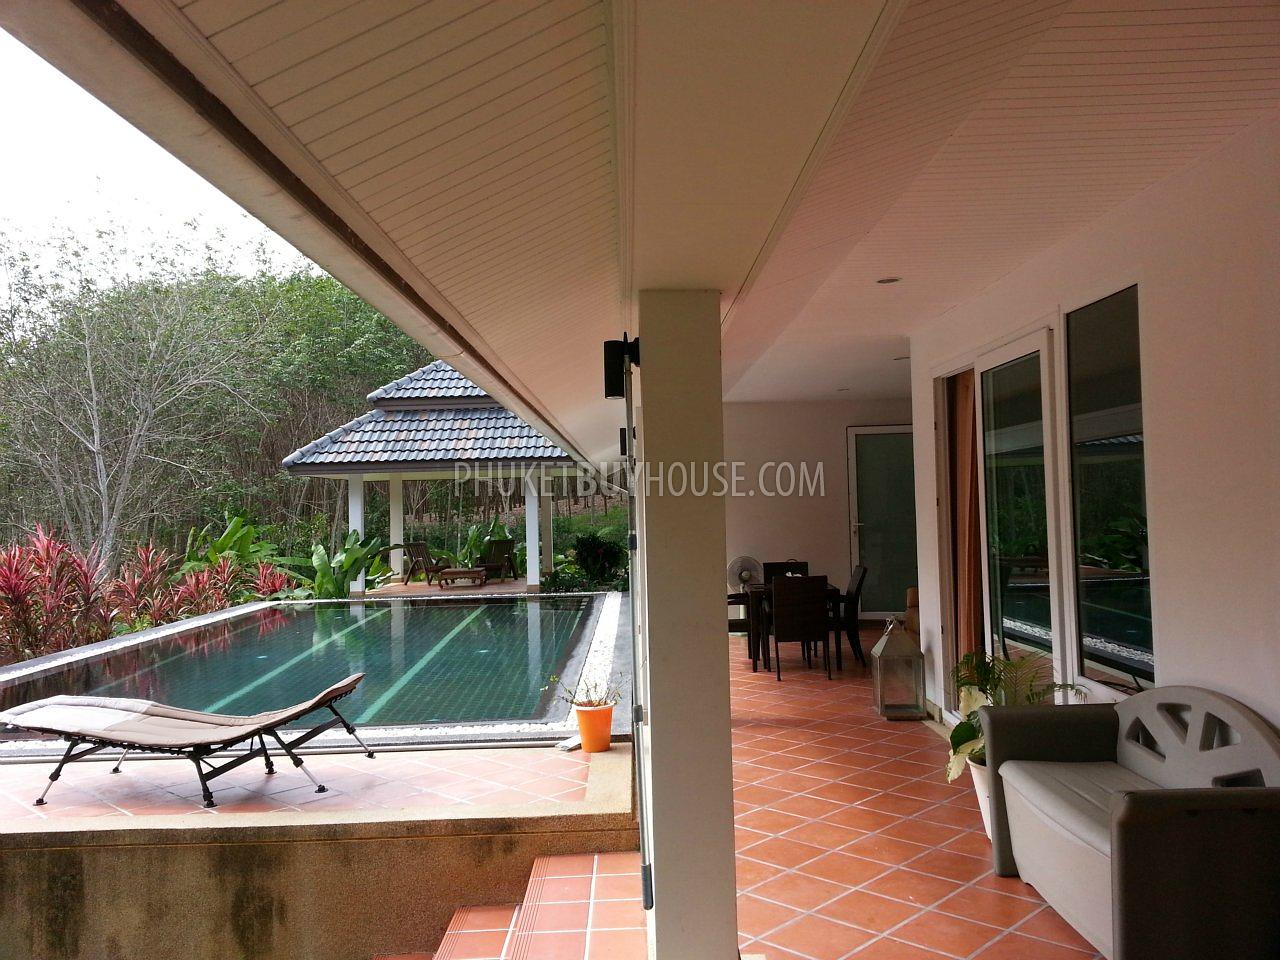 EAS3910: Hot! 4-bedroom modern pool villa on a 1 rai land plot near PIADS (UWC). Urgent sale!. Photo #12